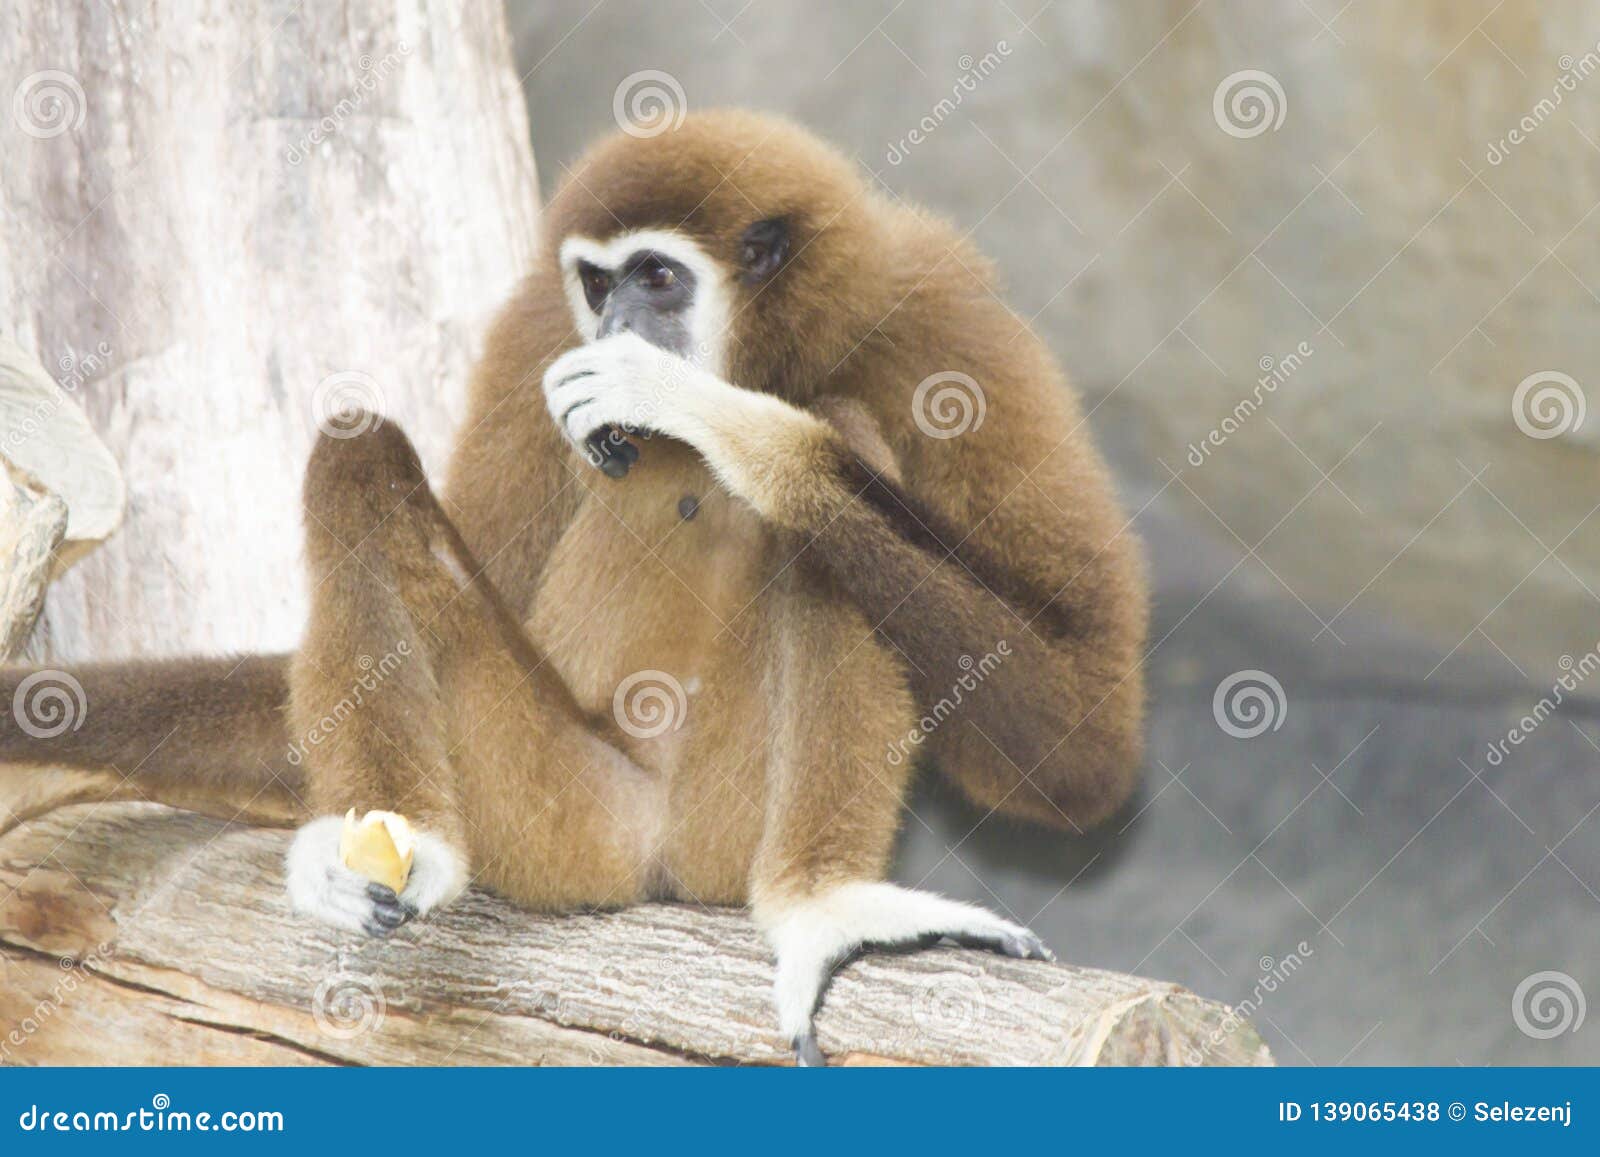 Very funny monkey stock photo. Image of funny, isolated - 139065438